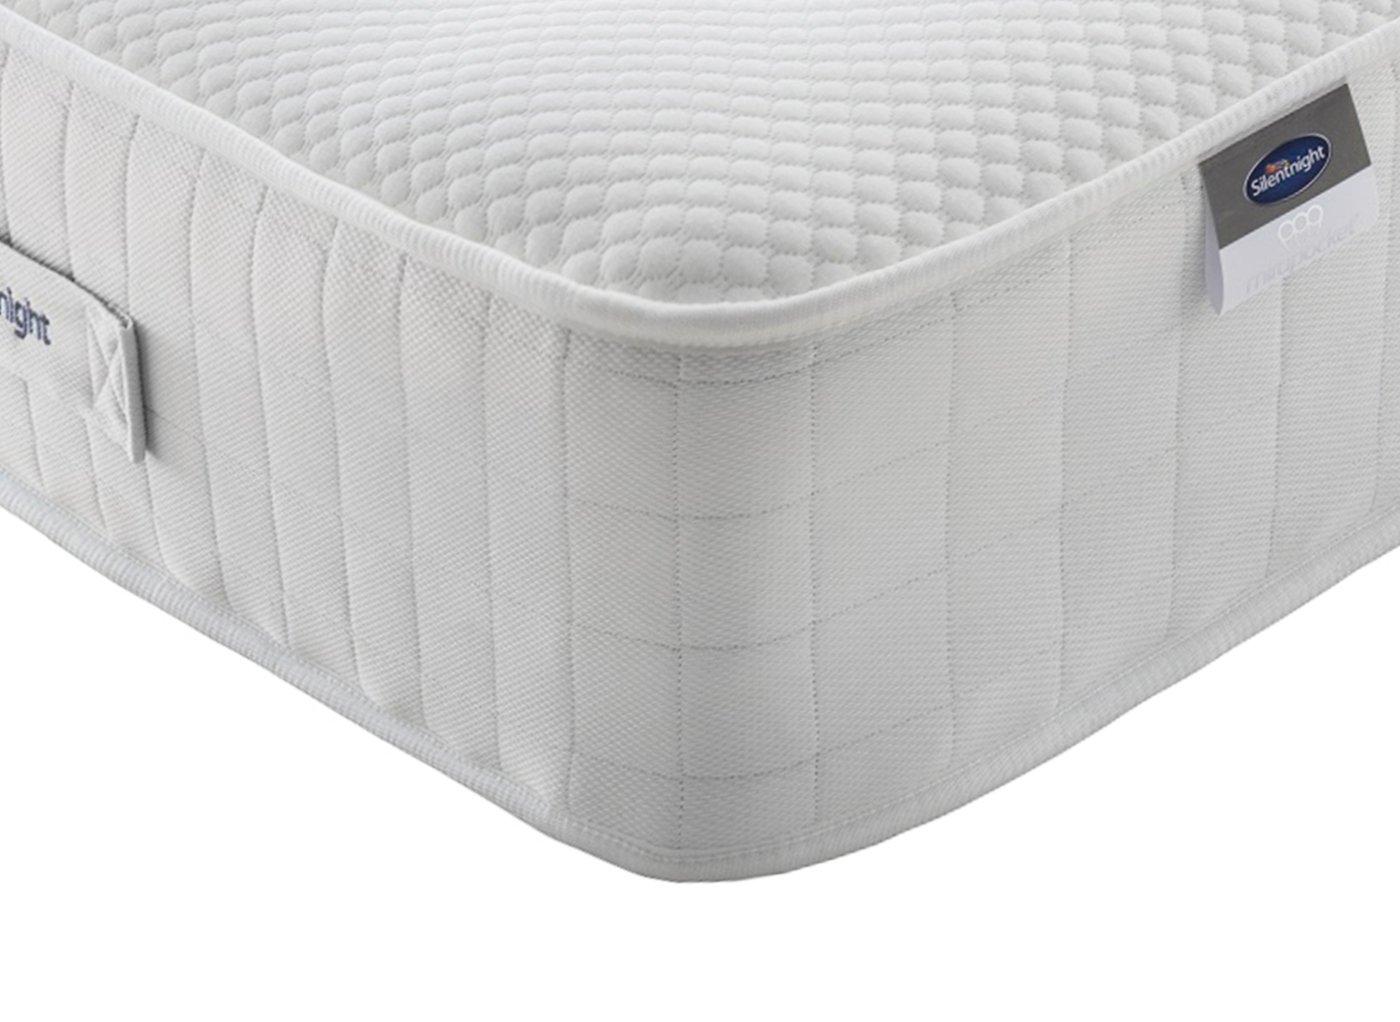 silentnight mirapocket 800 mattress review